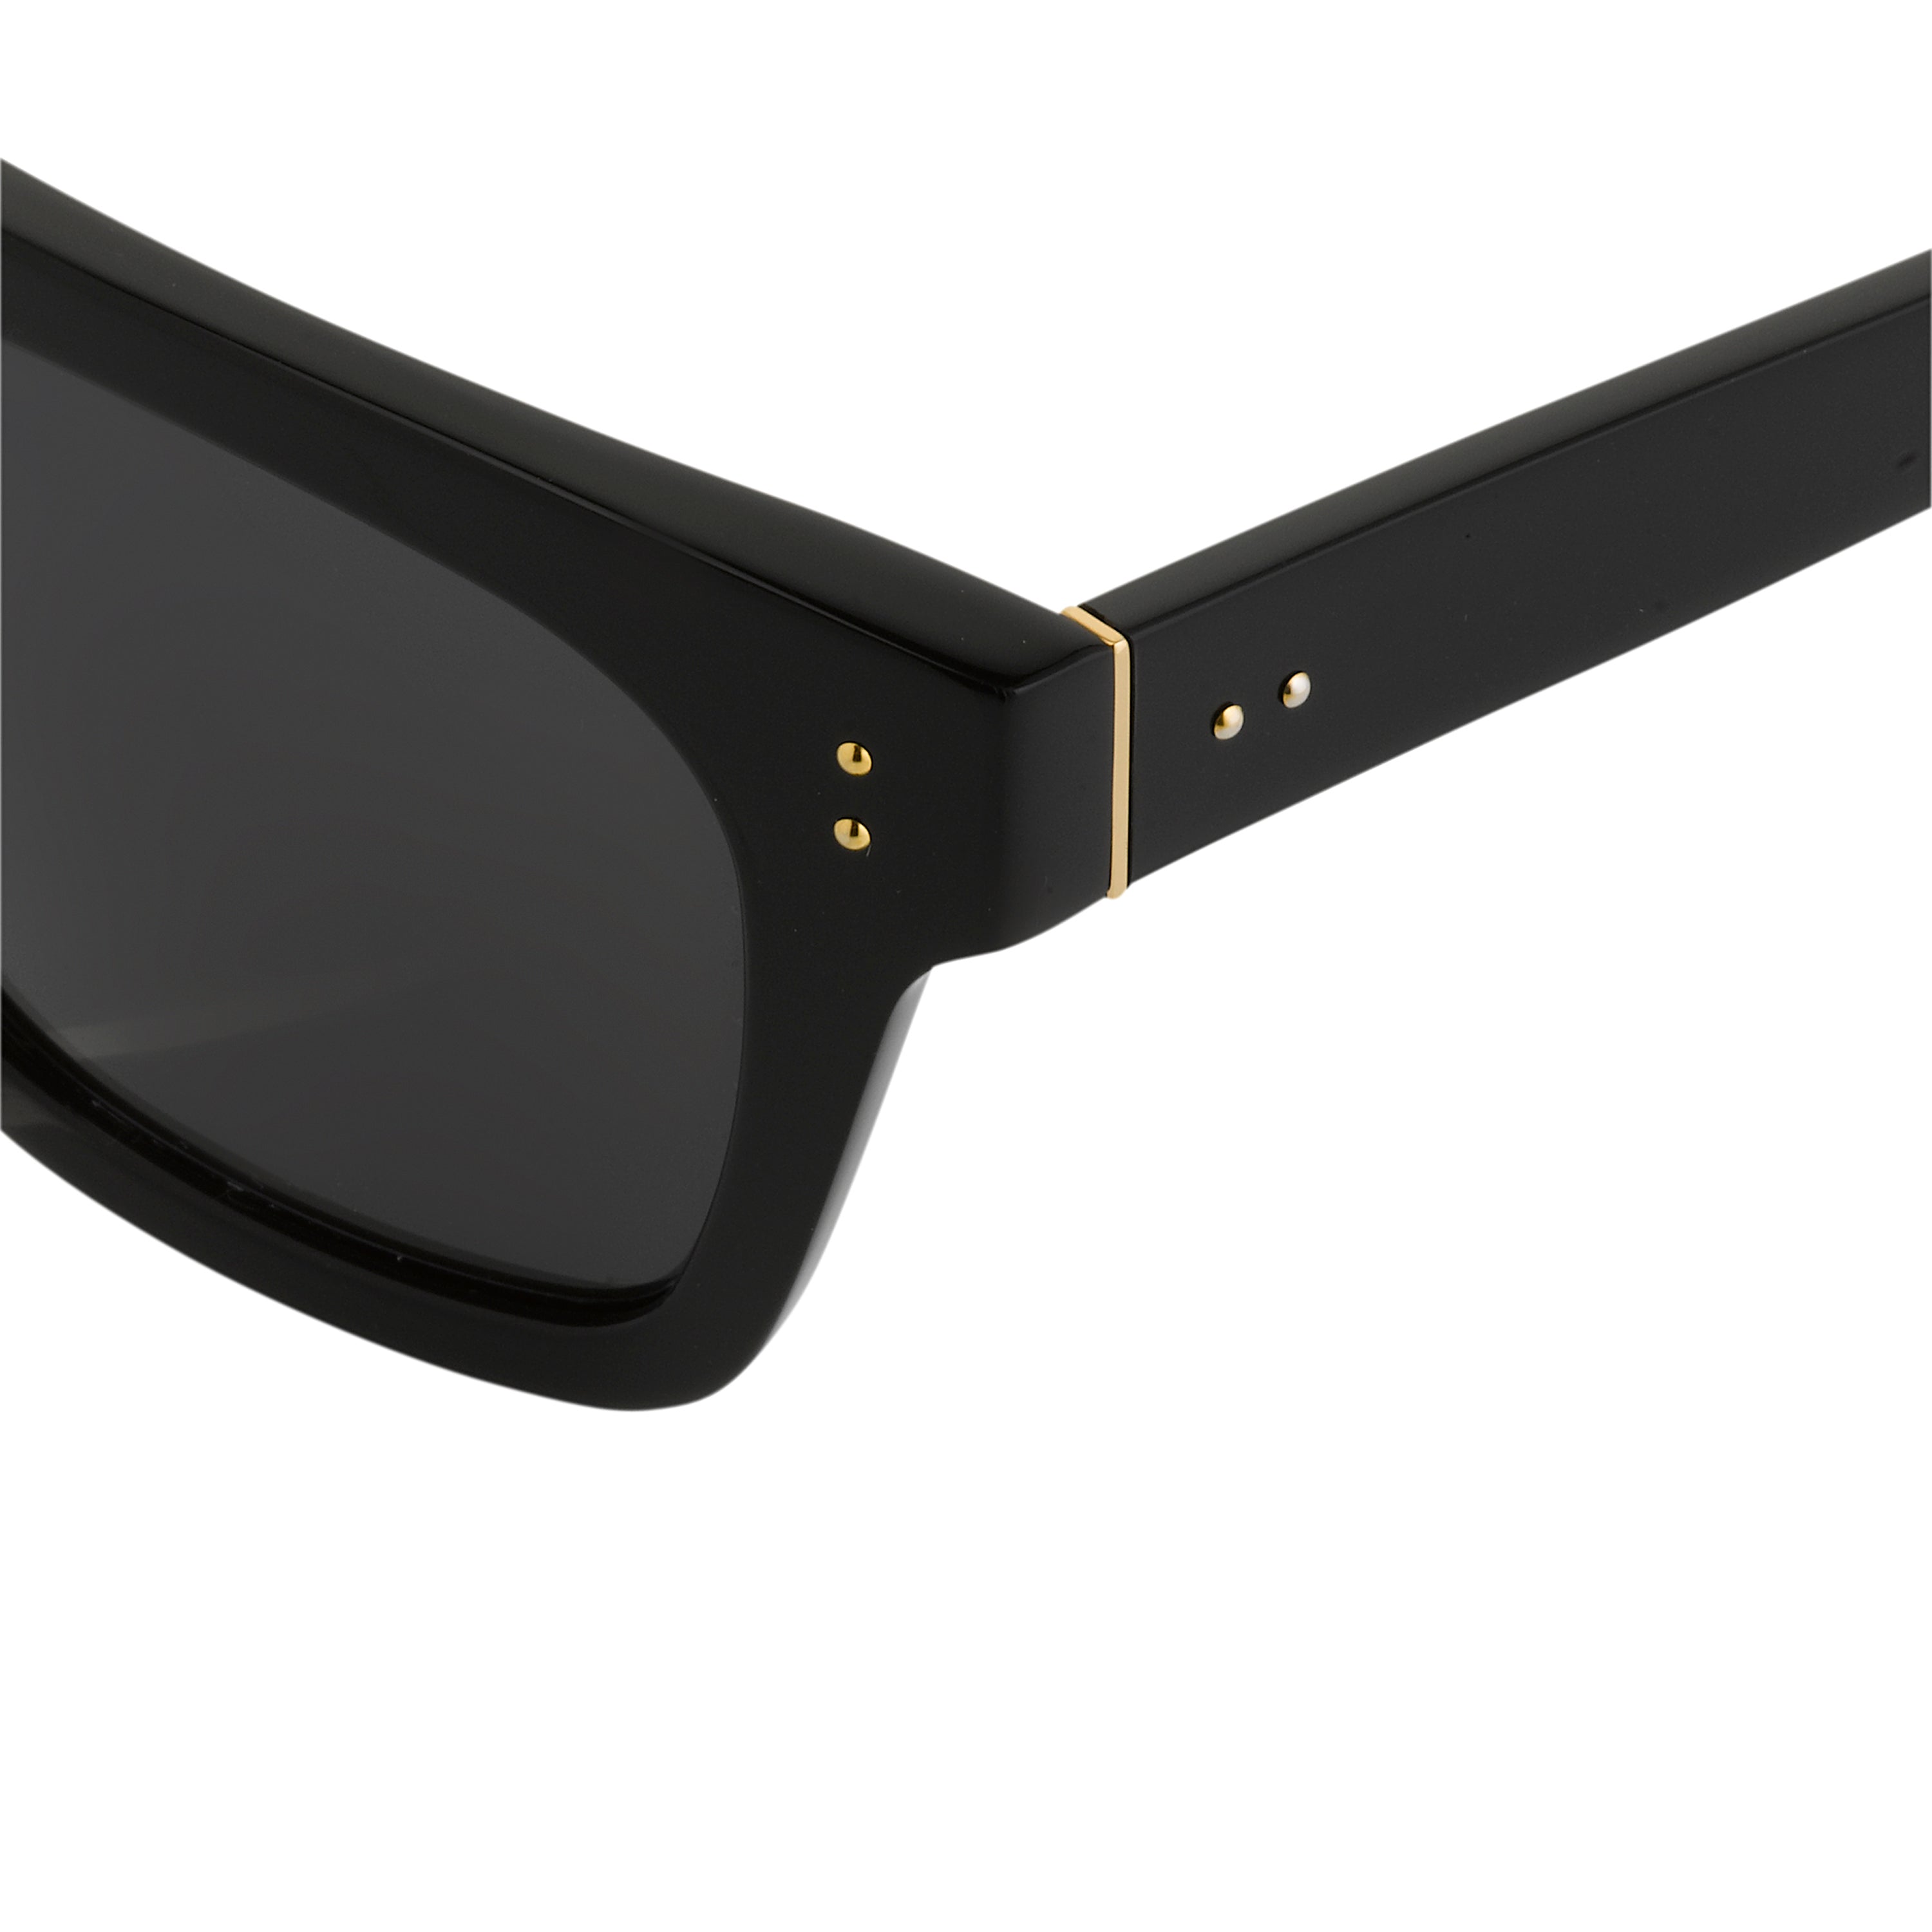 Desiree D-Frame Sunglasses in Black (Men's) by LINDA FARROW – LINDA FARROW  (INT'L)